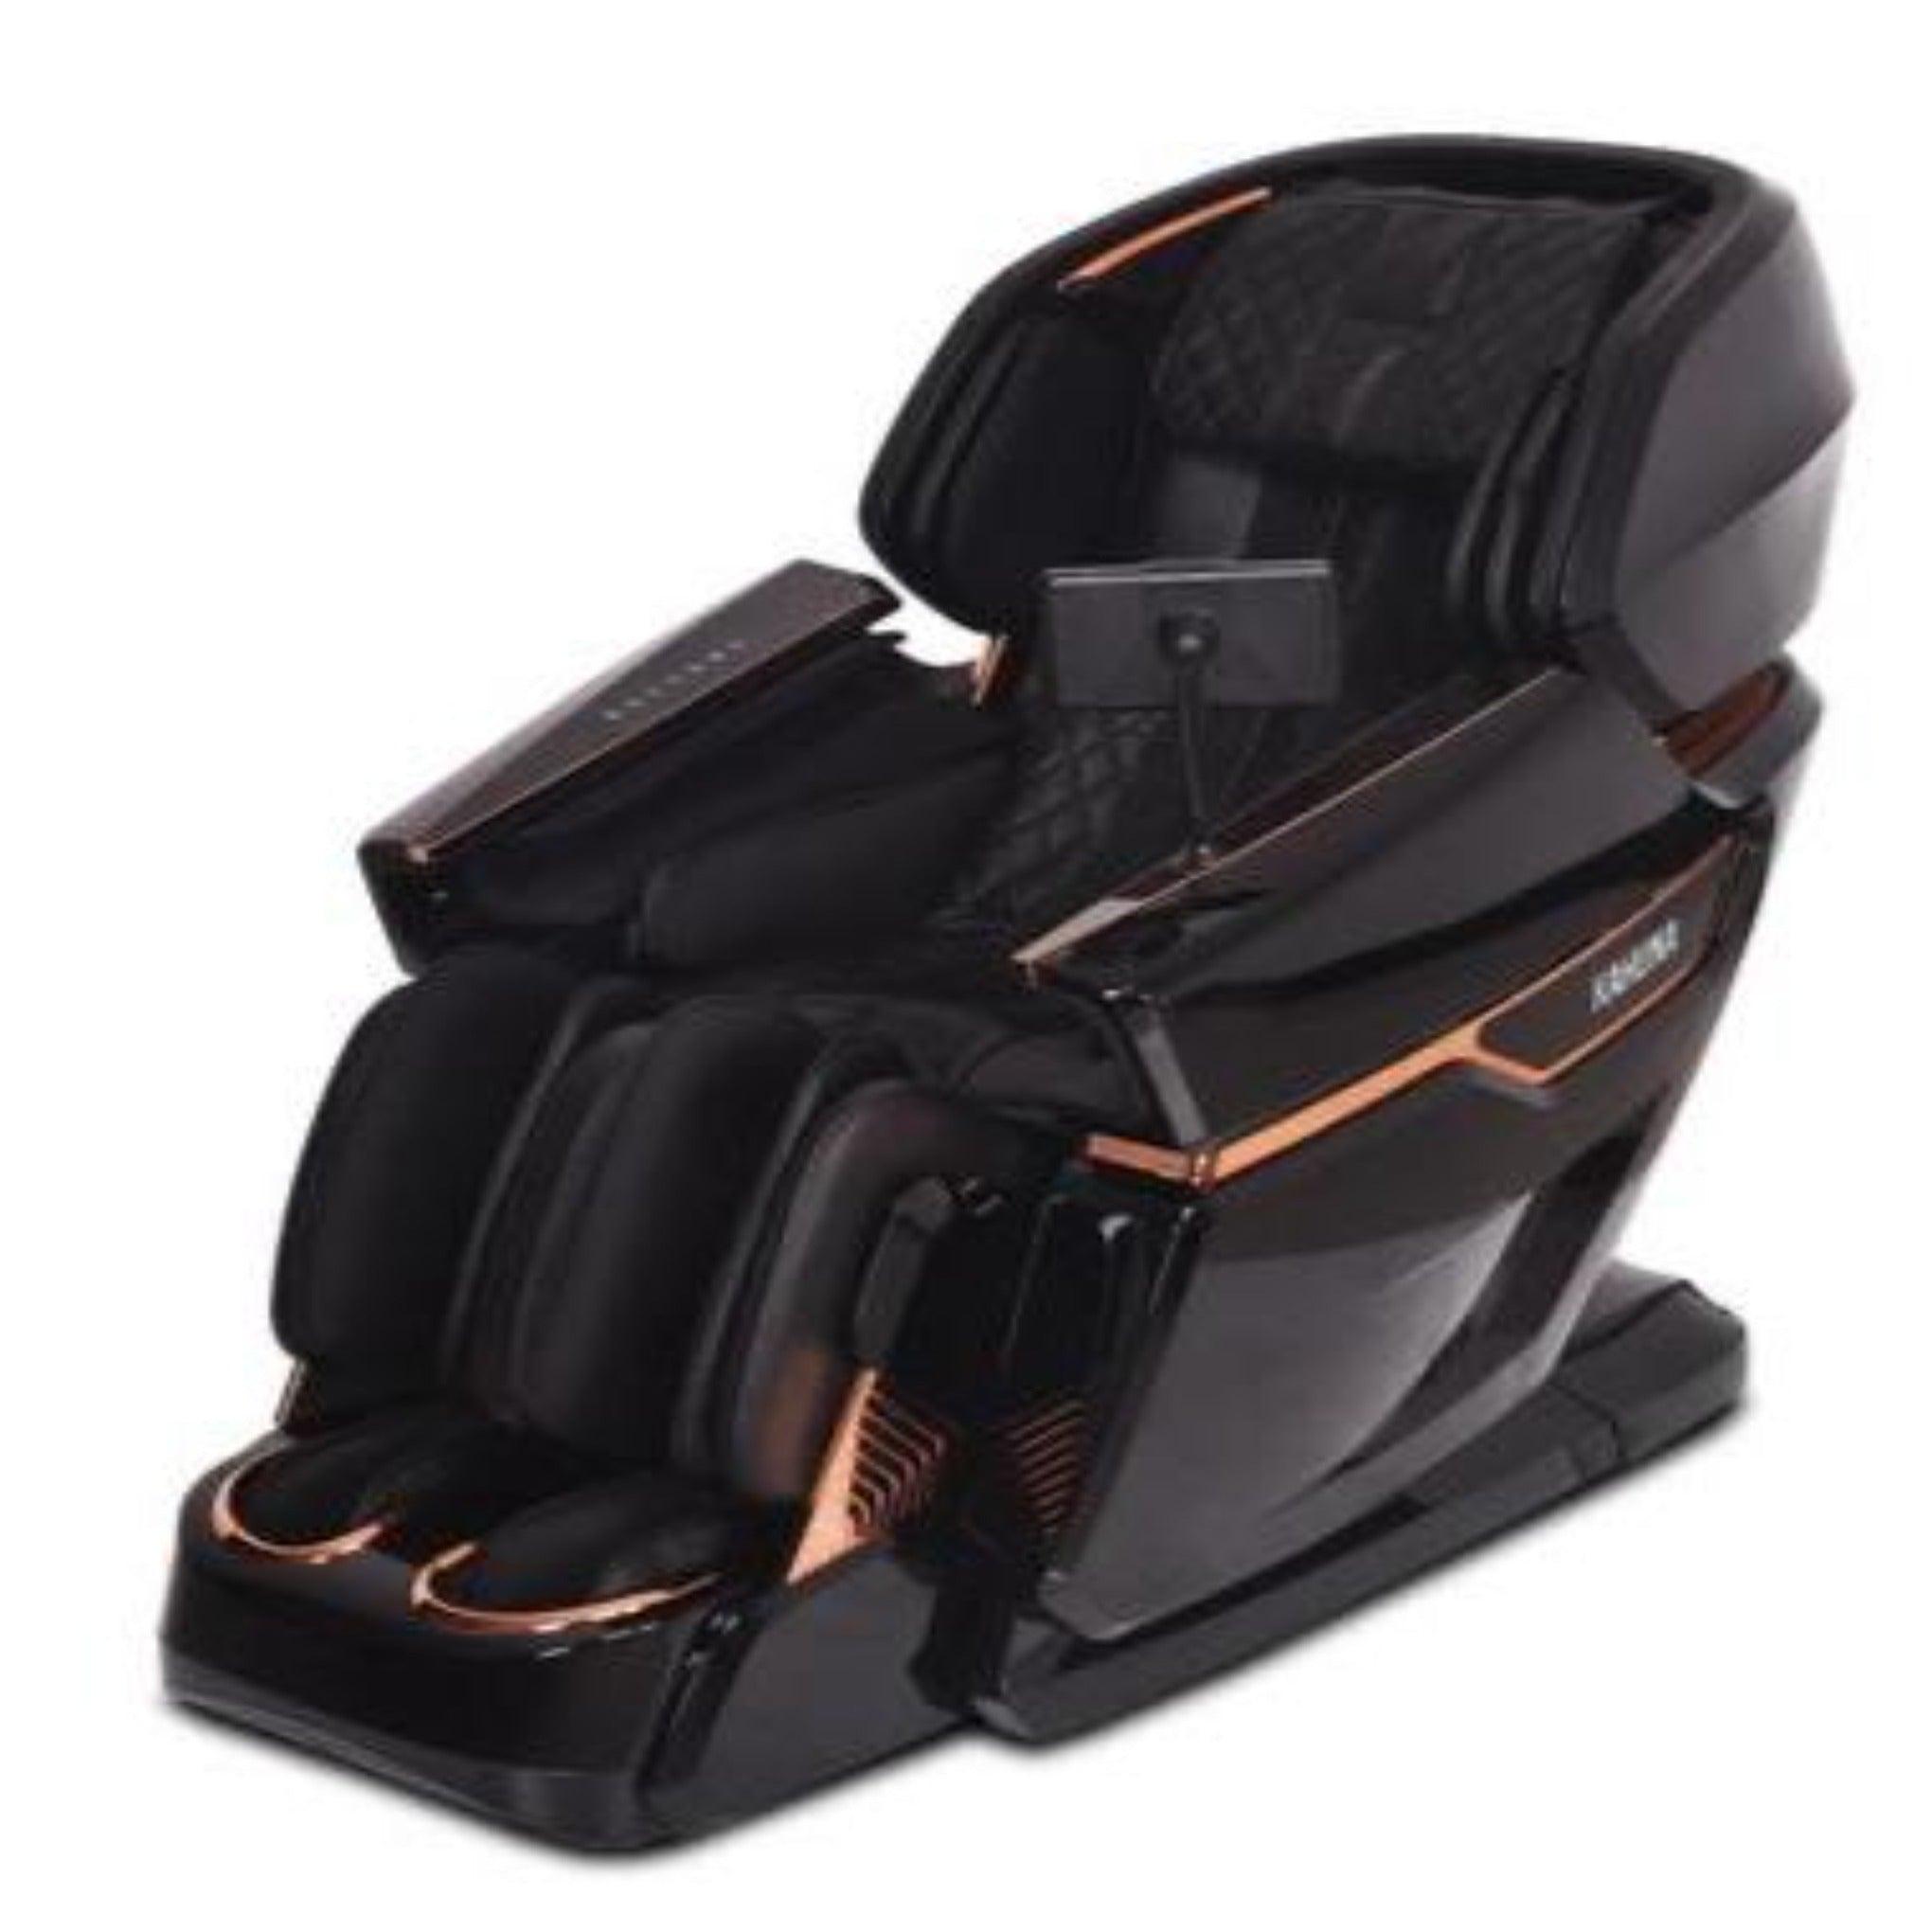 Kahuna The King’s Elite EM-8500 Massage Chair